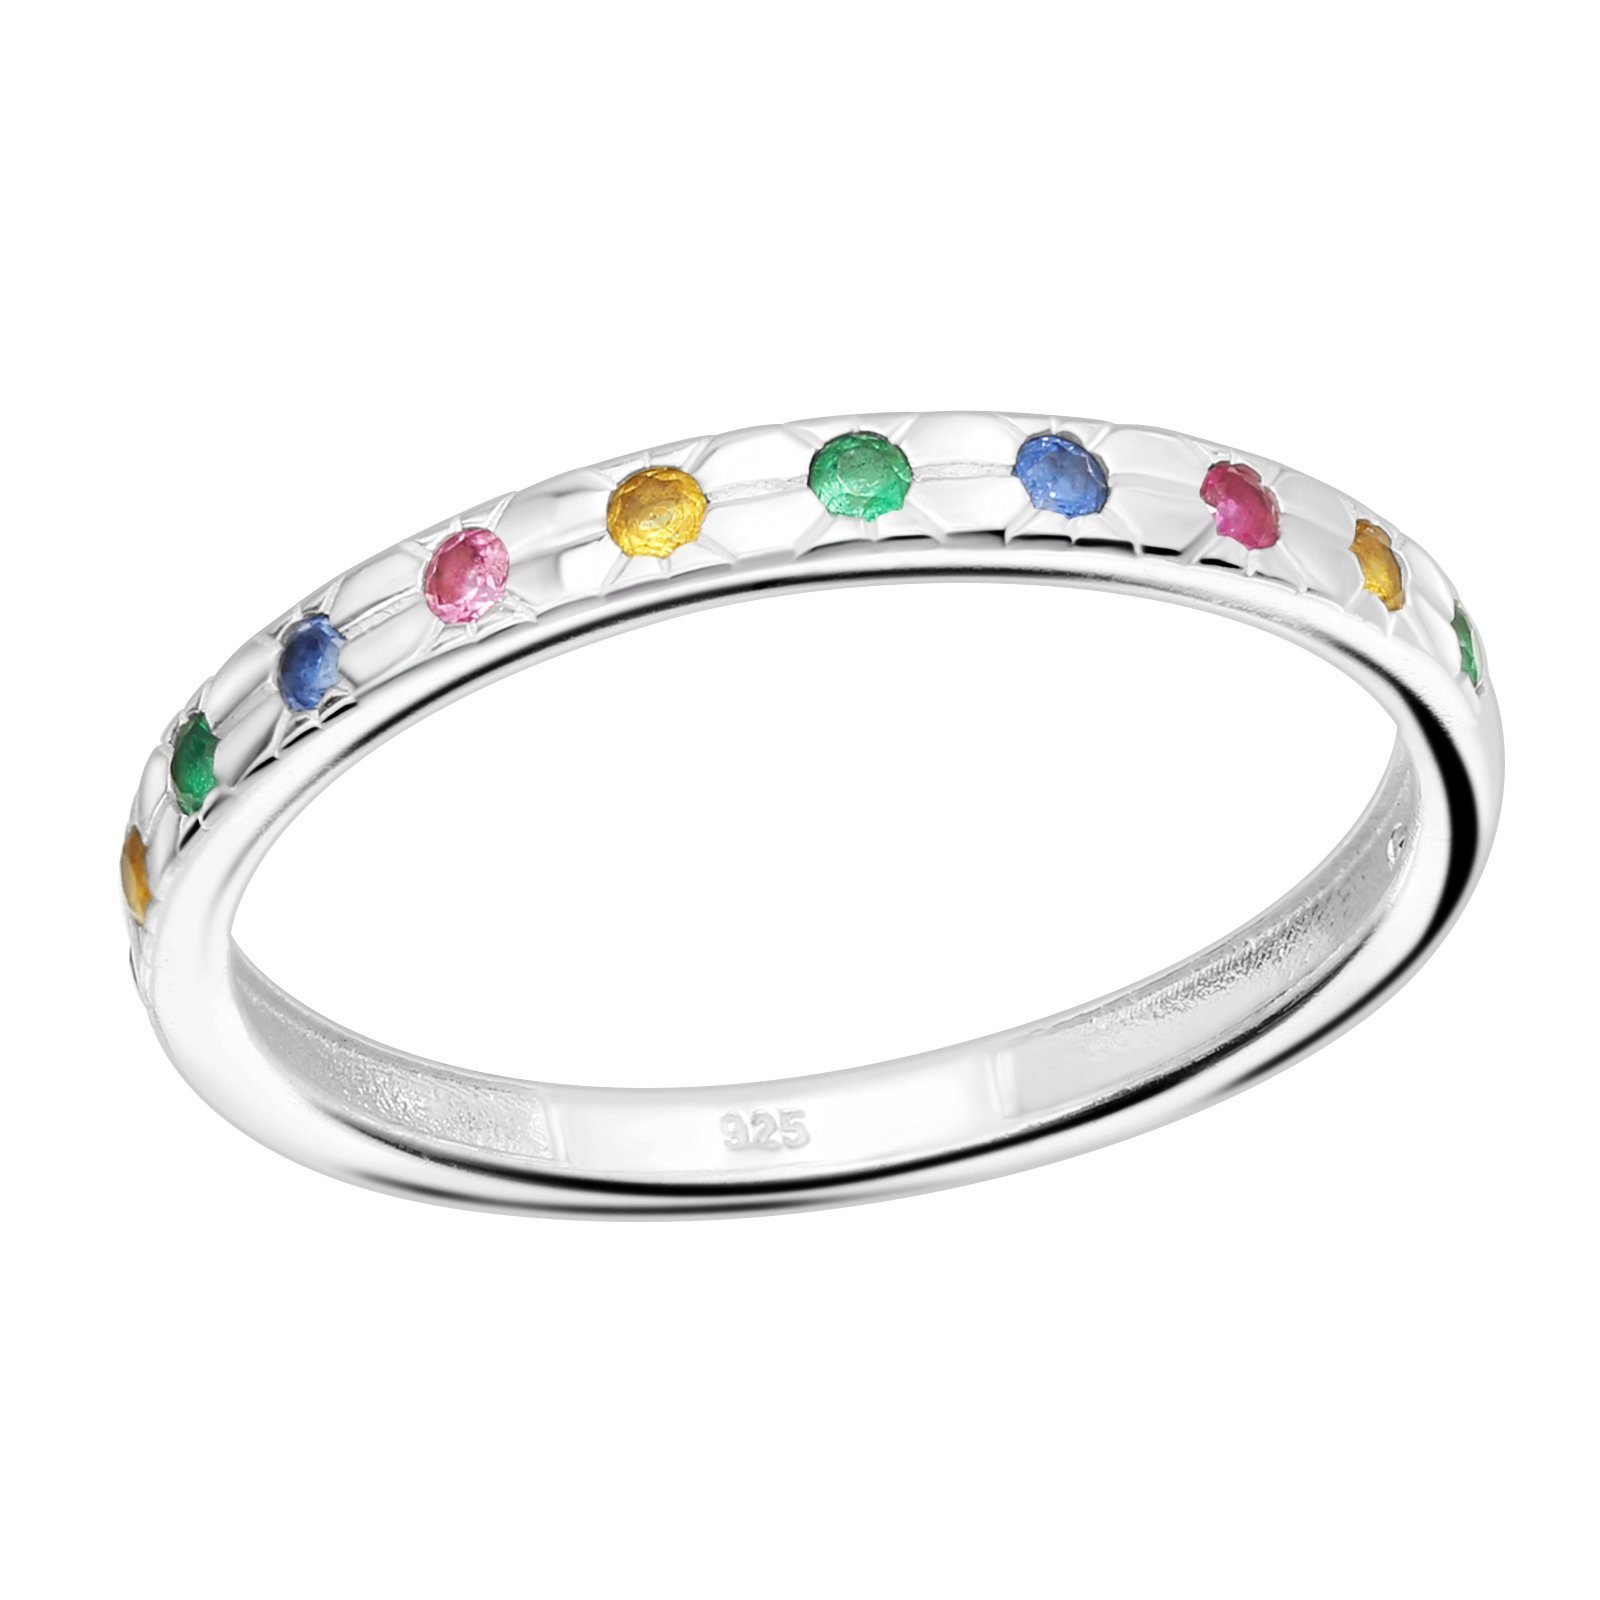 BUNGSA Fingerring Ring farbige Kristalle aus 925 Silber Damen (Ring)